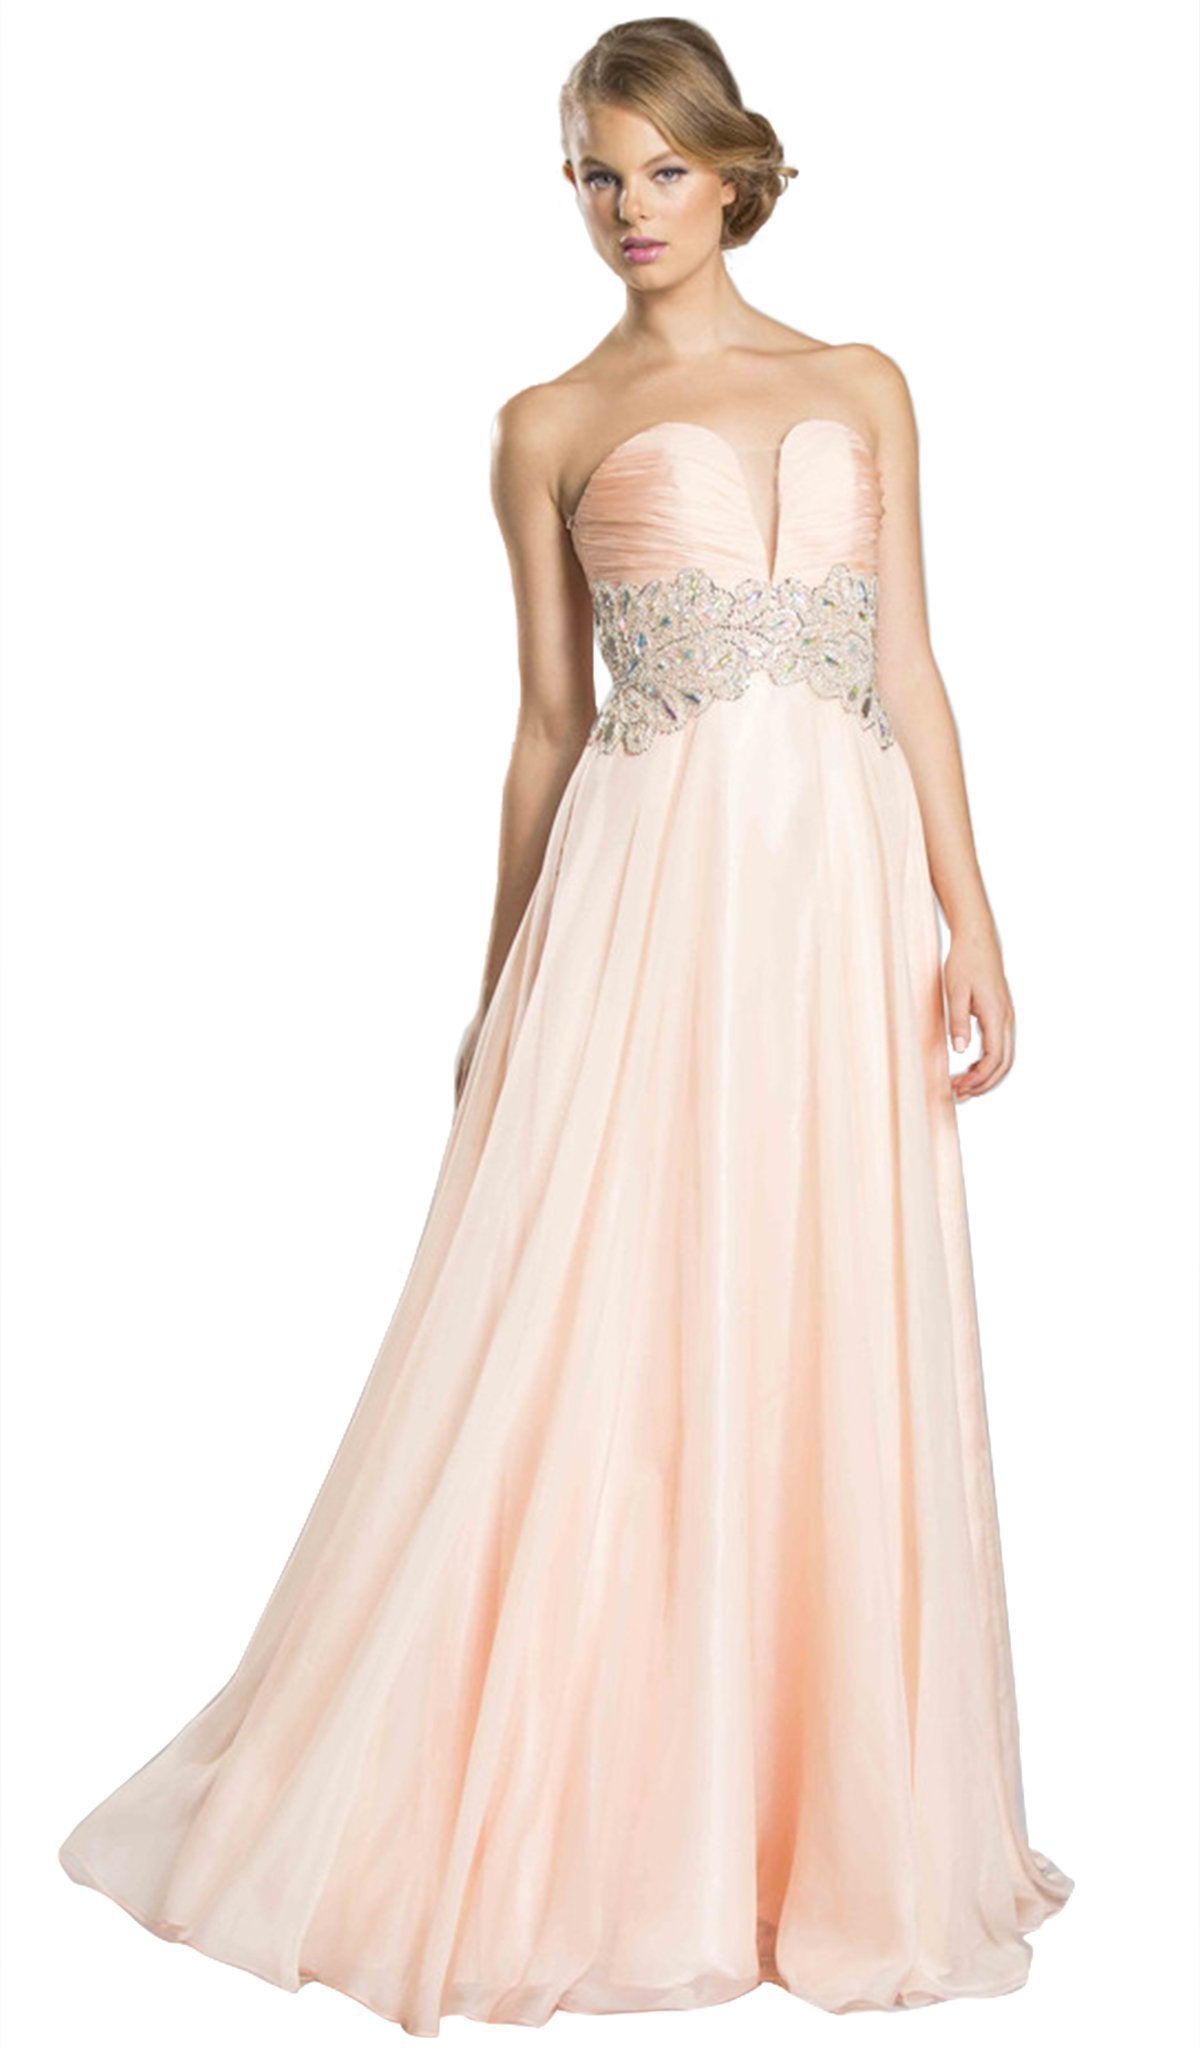 Aspeed Design - Plunge Sweetheart Neckline Strapless A-Line Prom Dress
